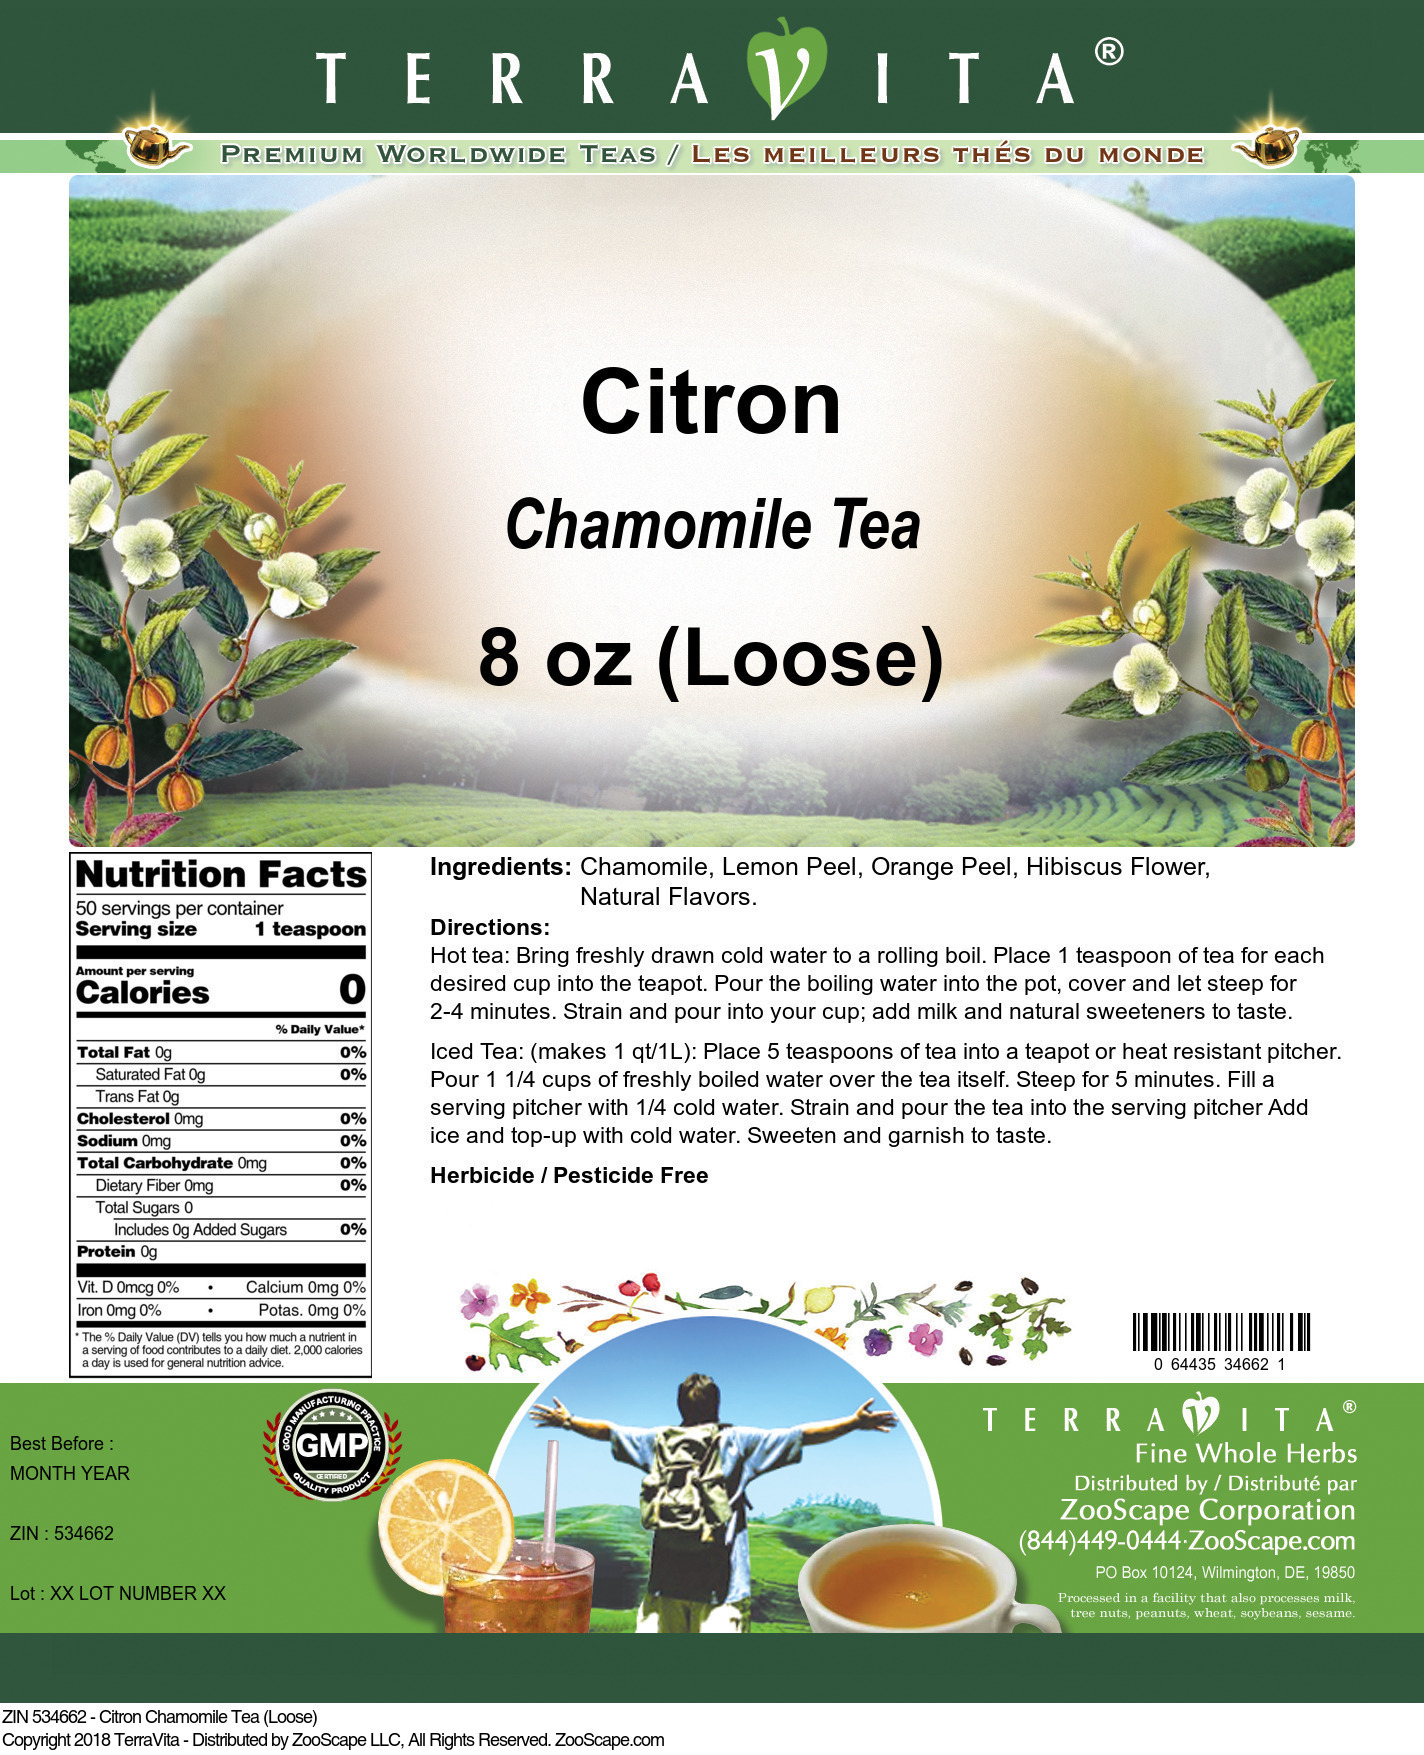 Citron Chamomile Tea (Loose) - Label